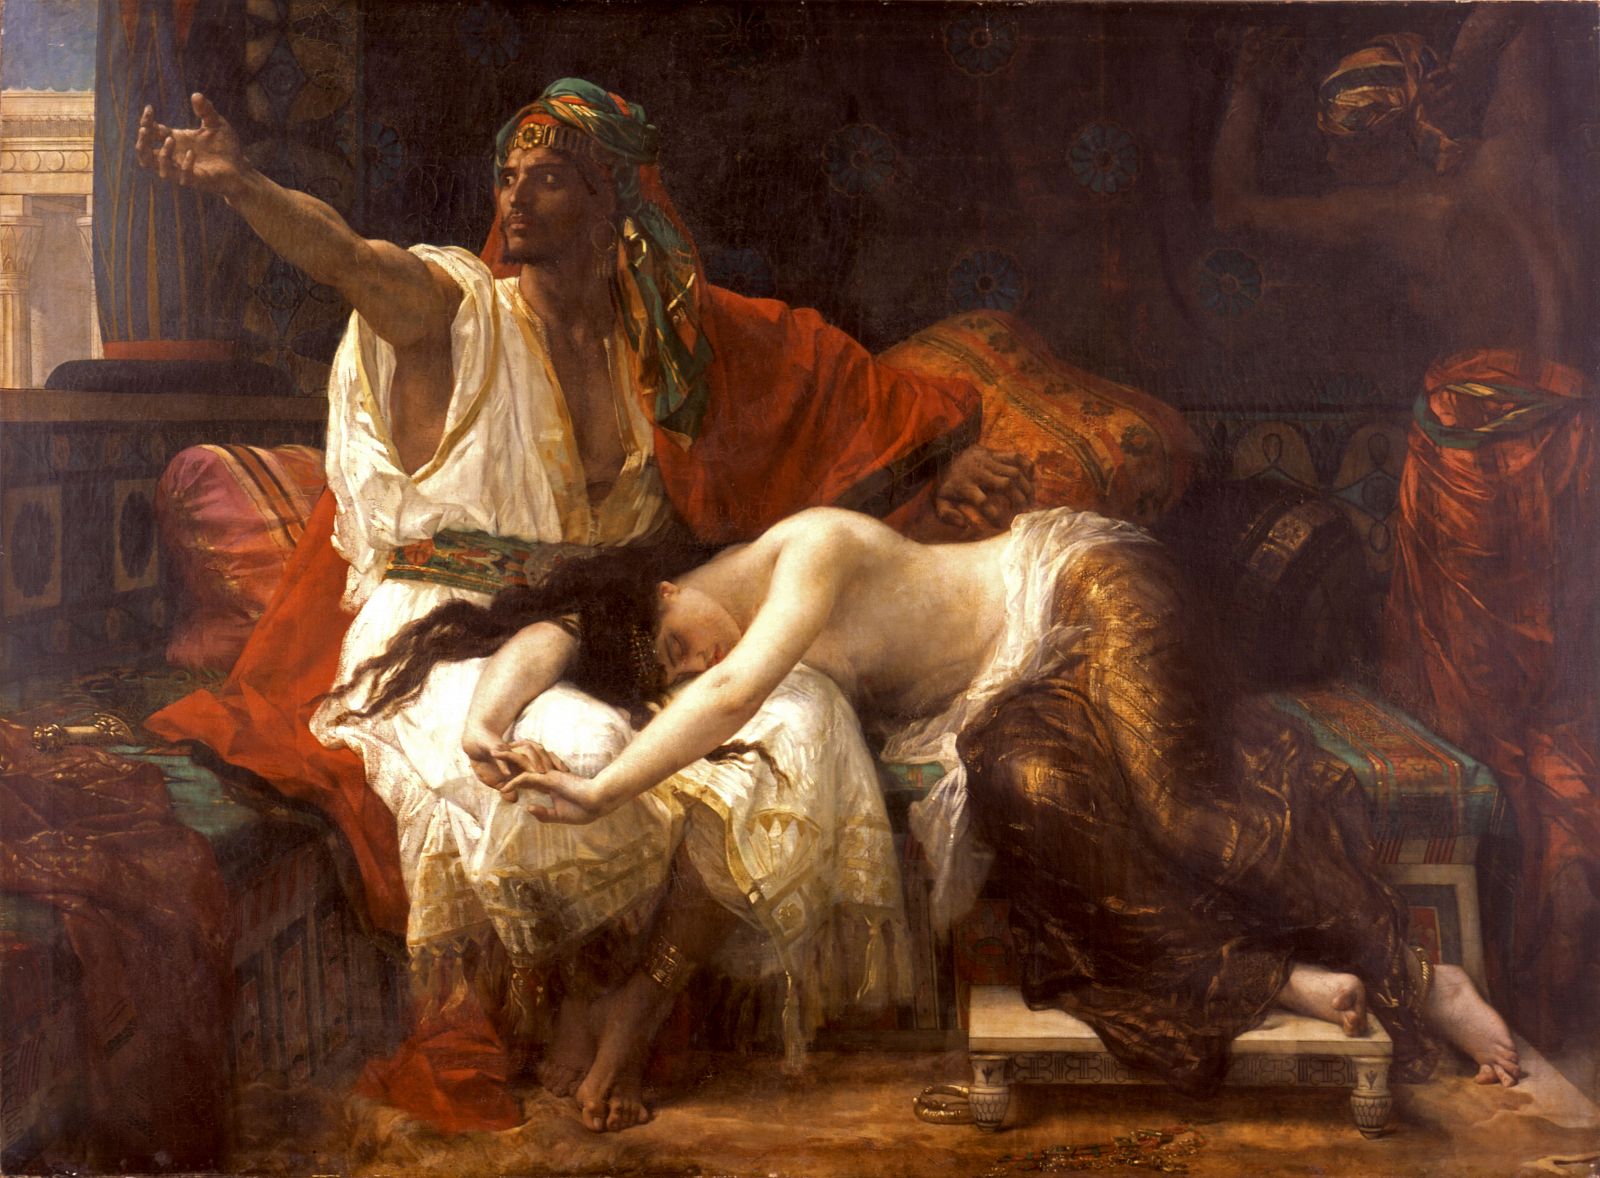 Alexandre Cabanel 'Tamar' (1875). París, Musée d'Orsay